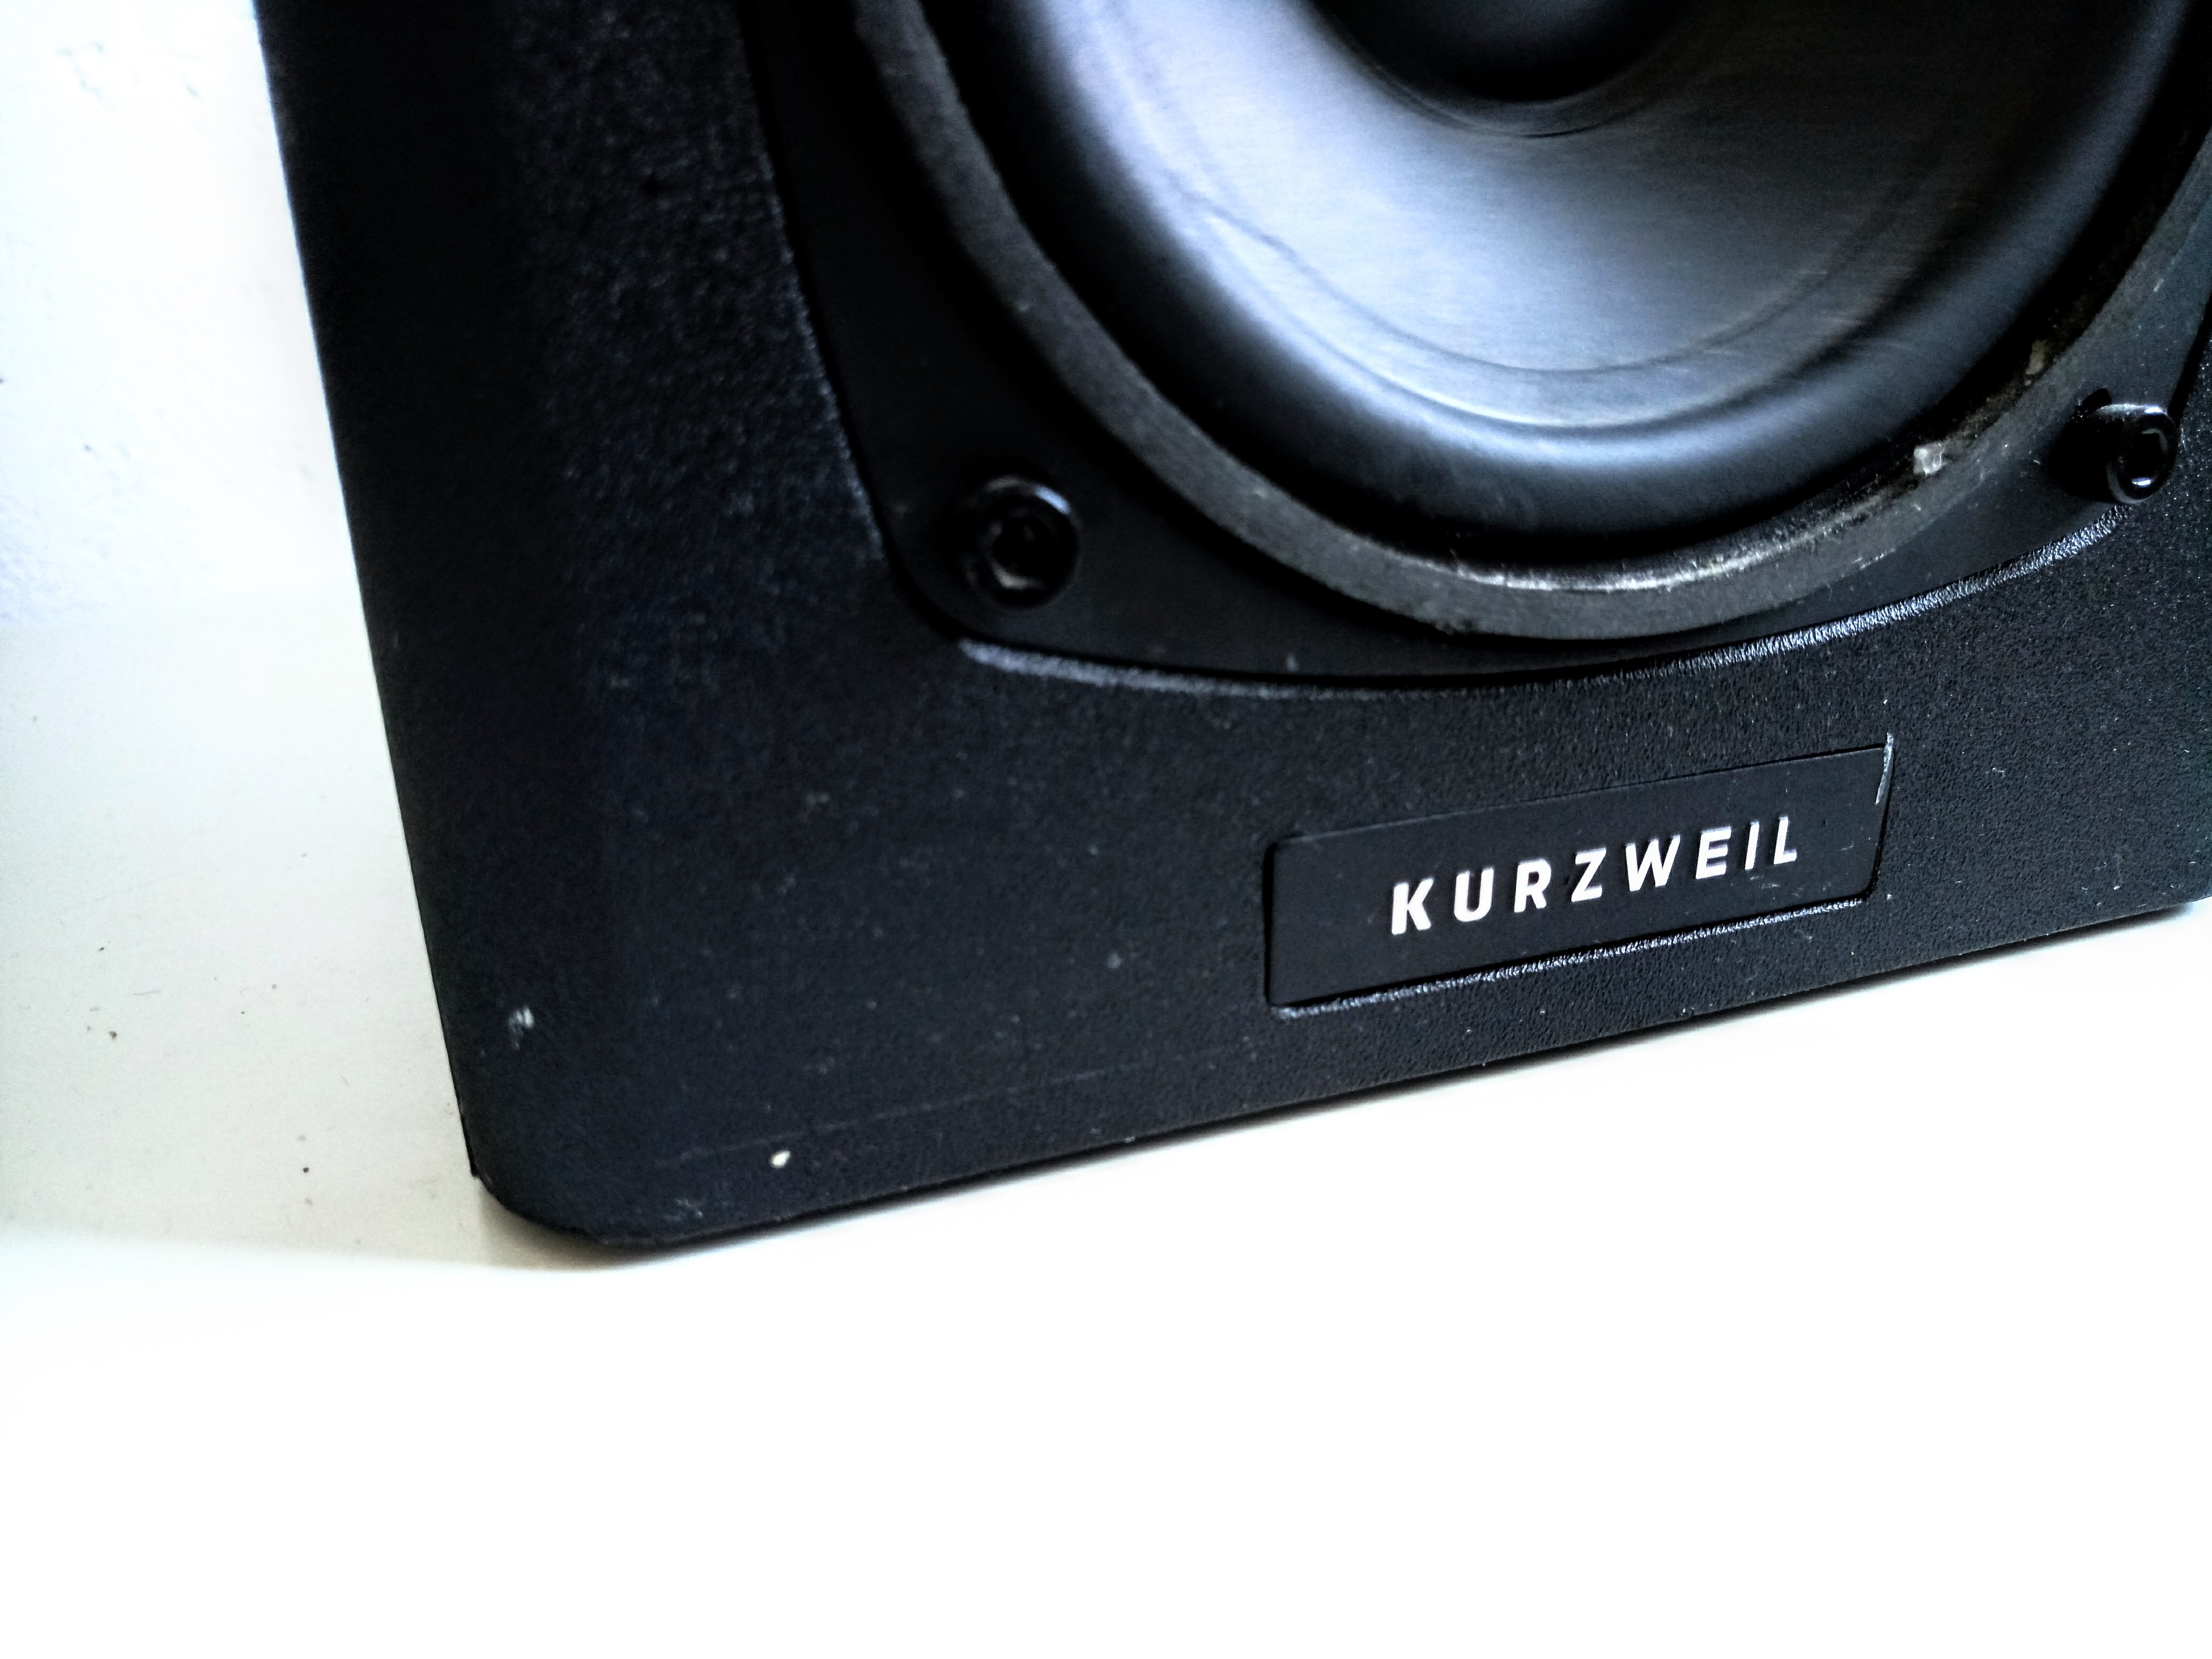 Kurzweil Music Systems - Wikipedia